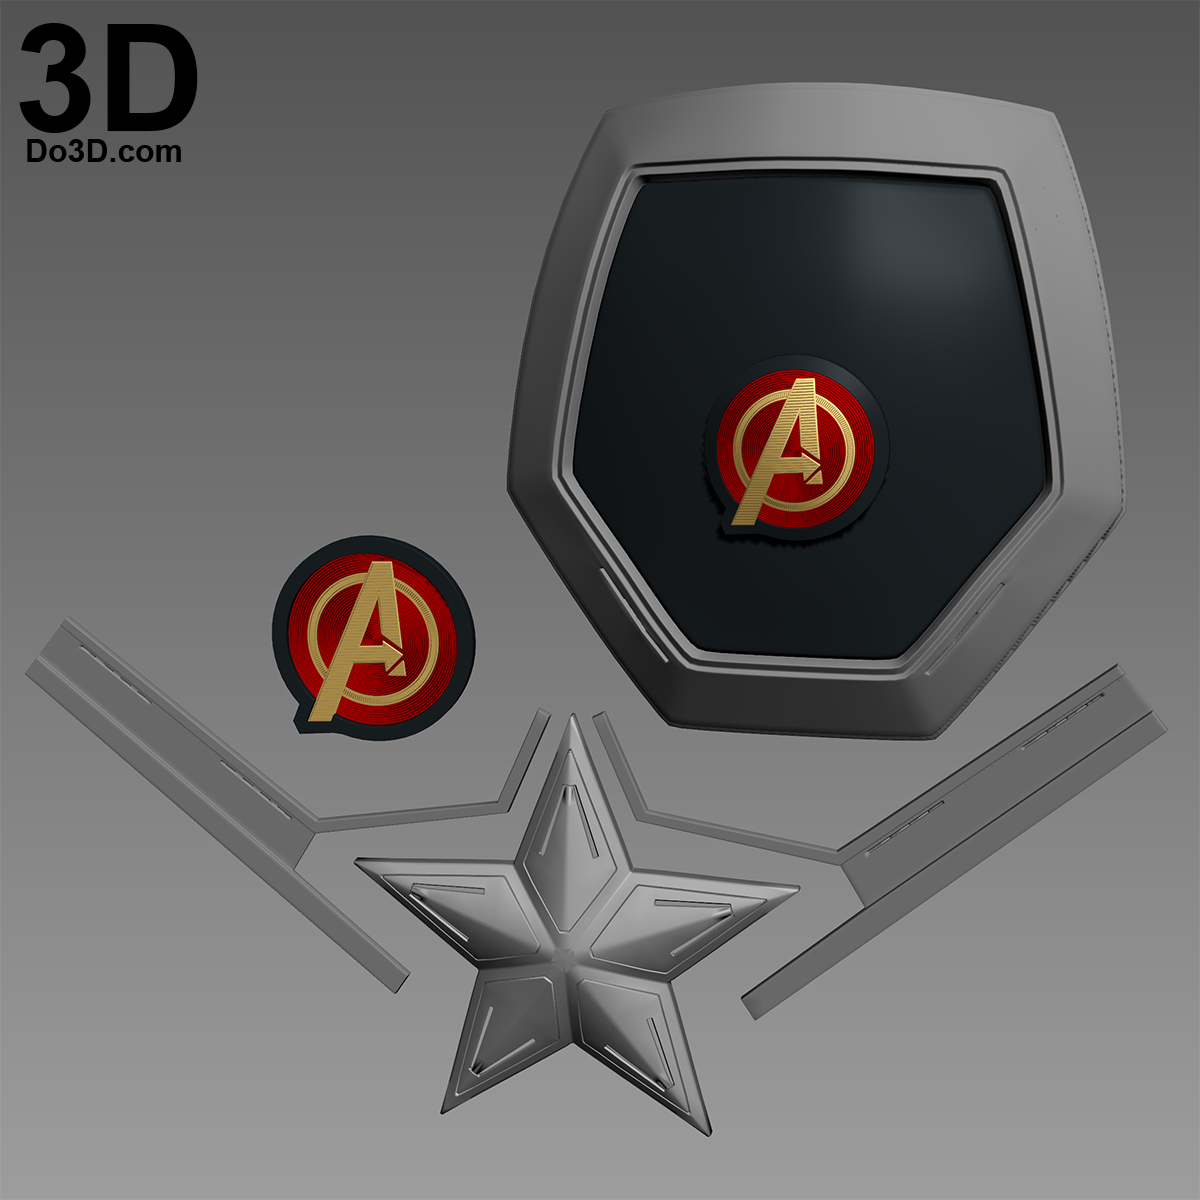 3D Printable Model: Shoulder Armor, Chest Star Piece And Avengers Logo  Emblem from Captain America Civil War| Print File Format: STL – Do3D  Portfolio